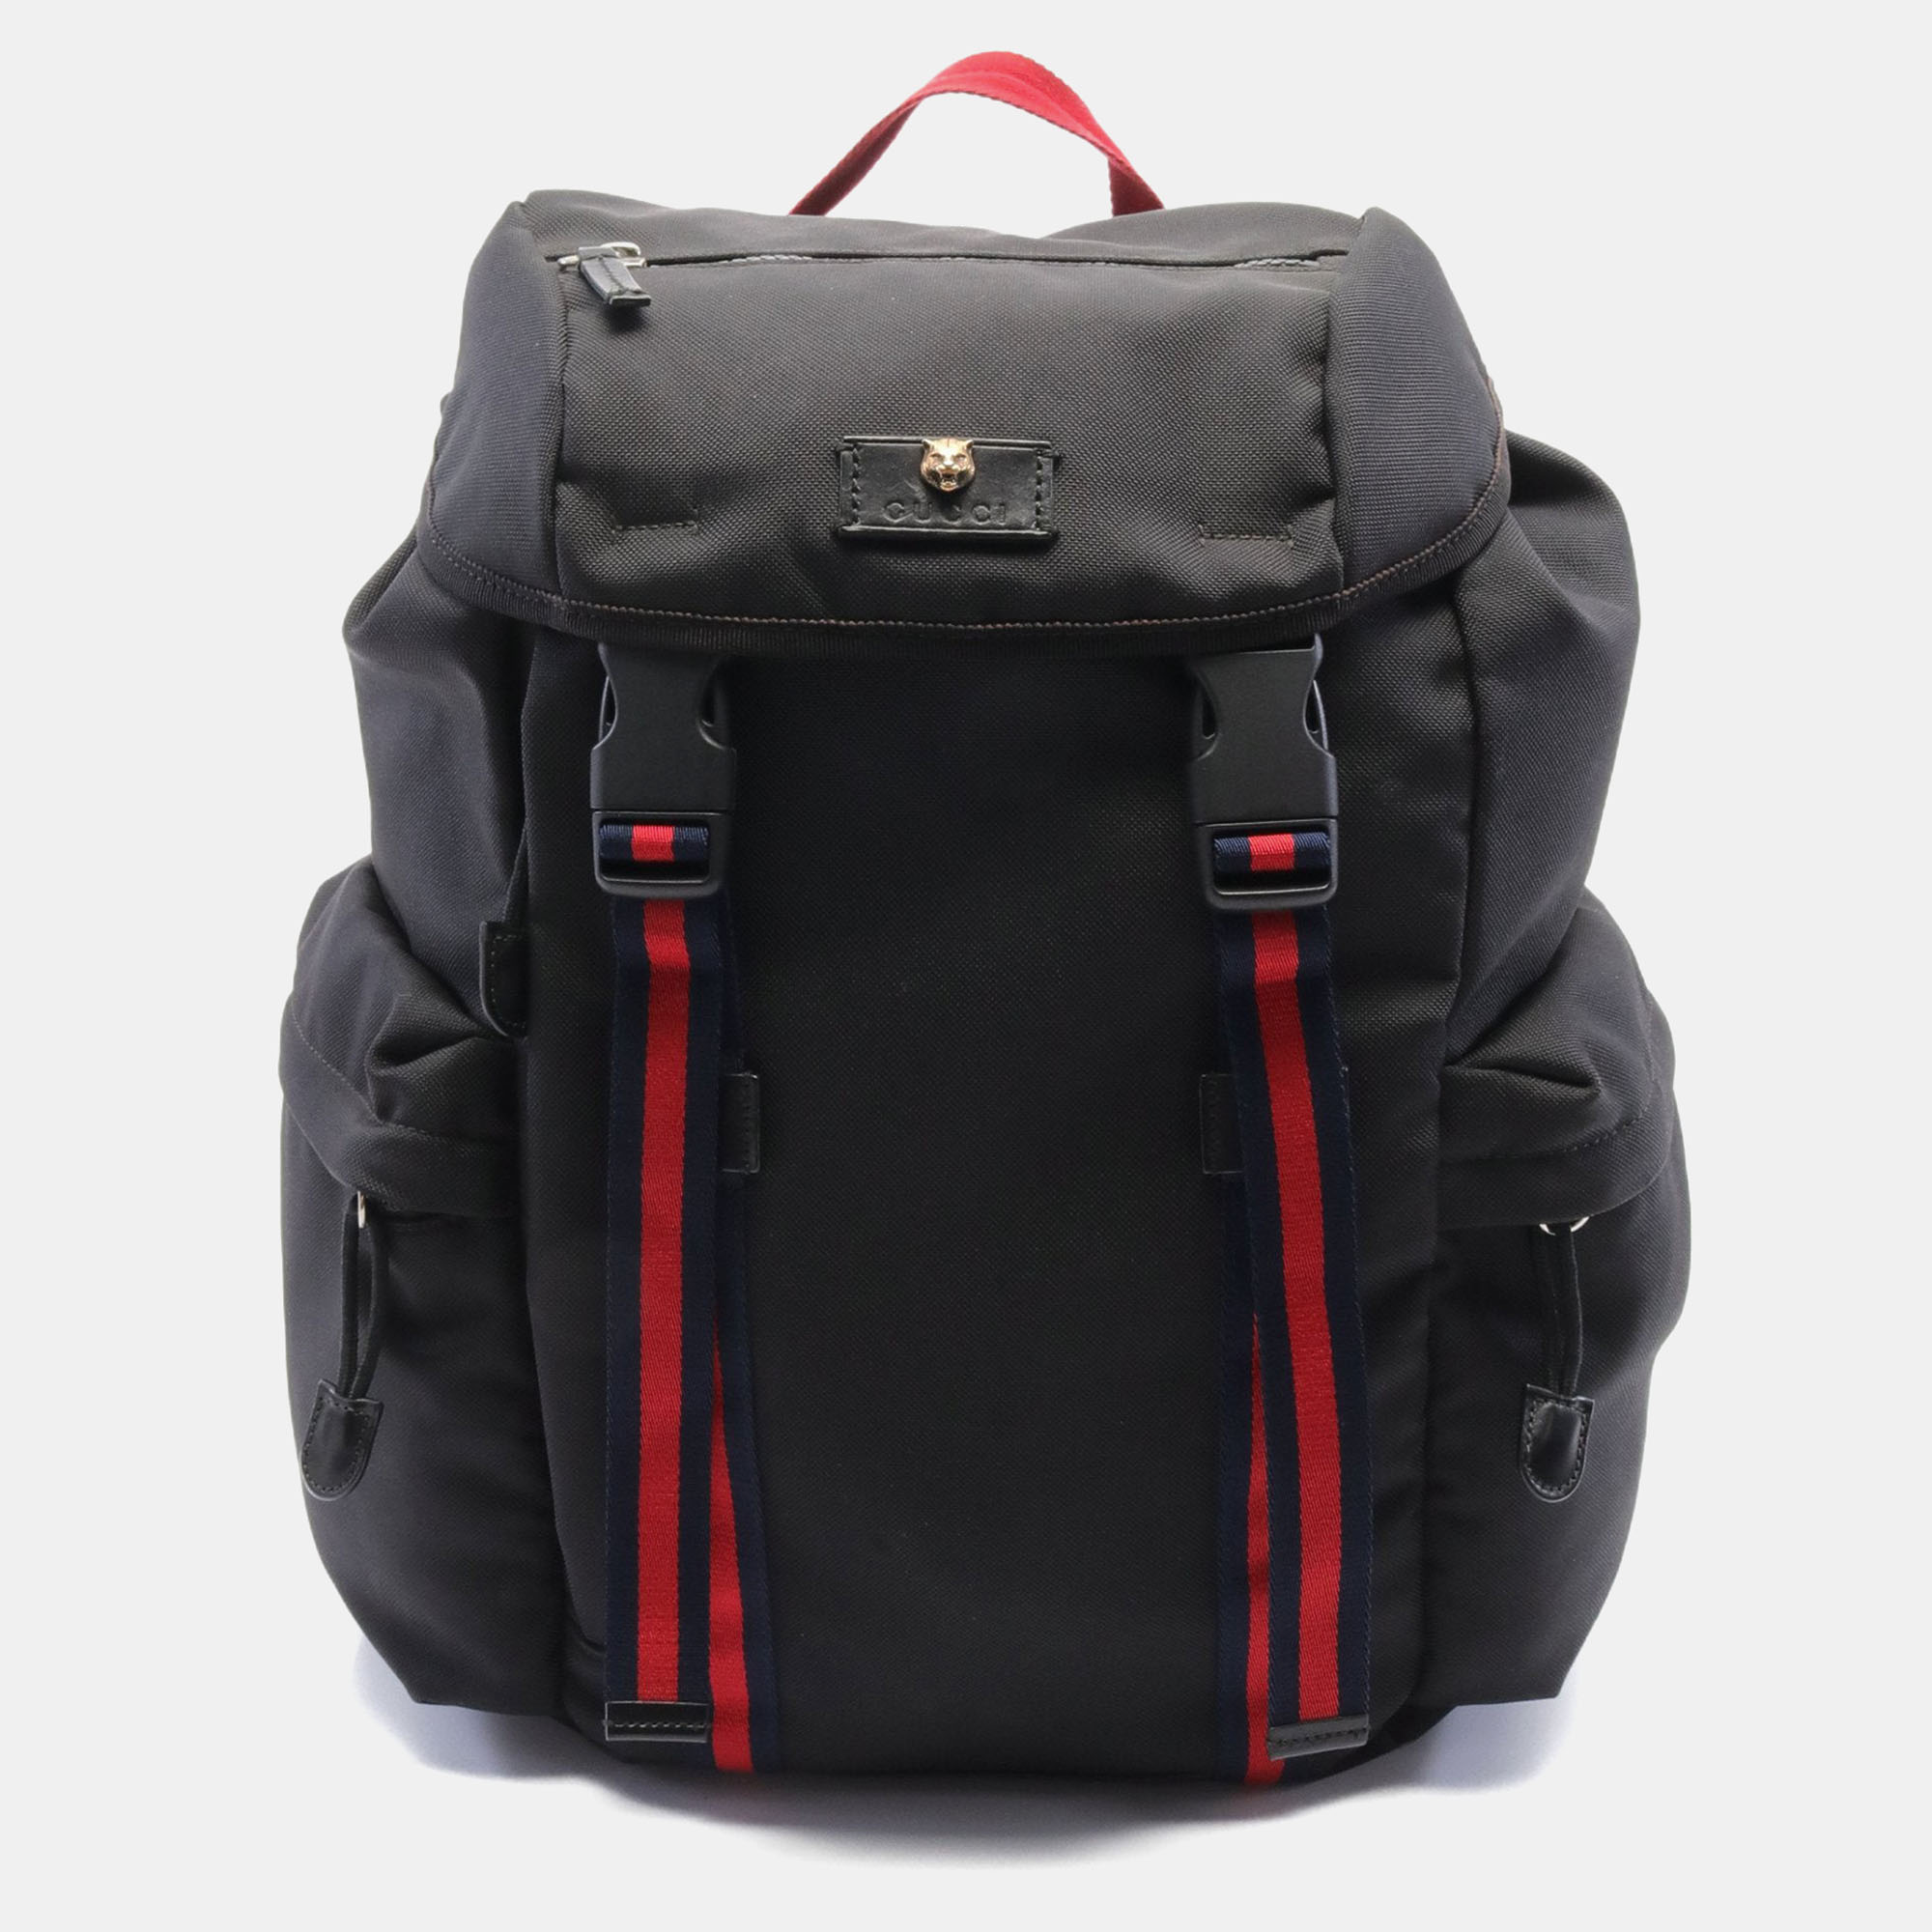 Gucci webbing line backpack rucksack techno canvas leather black